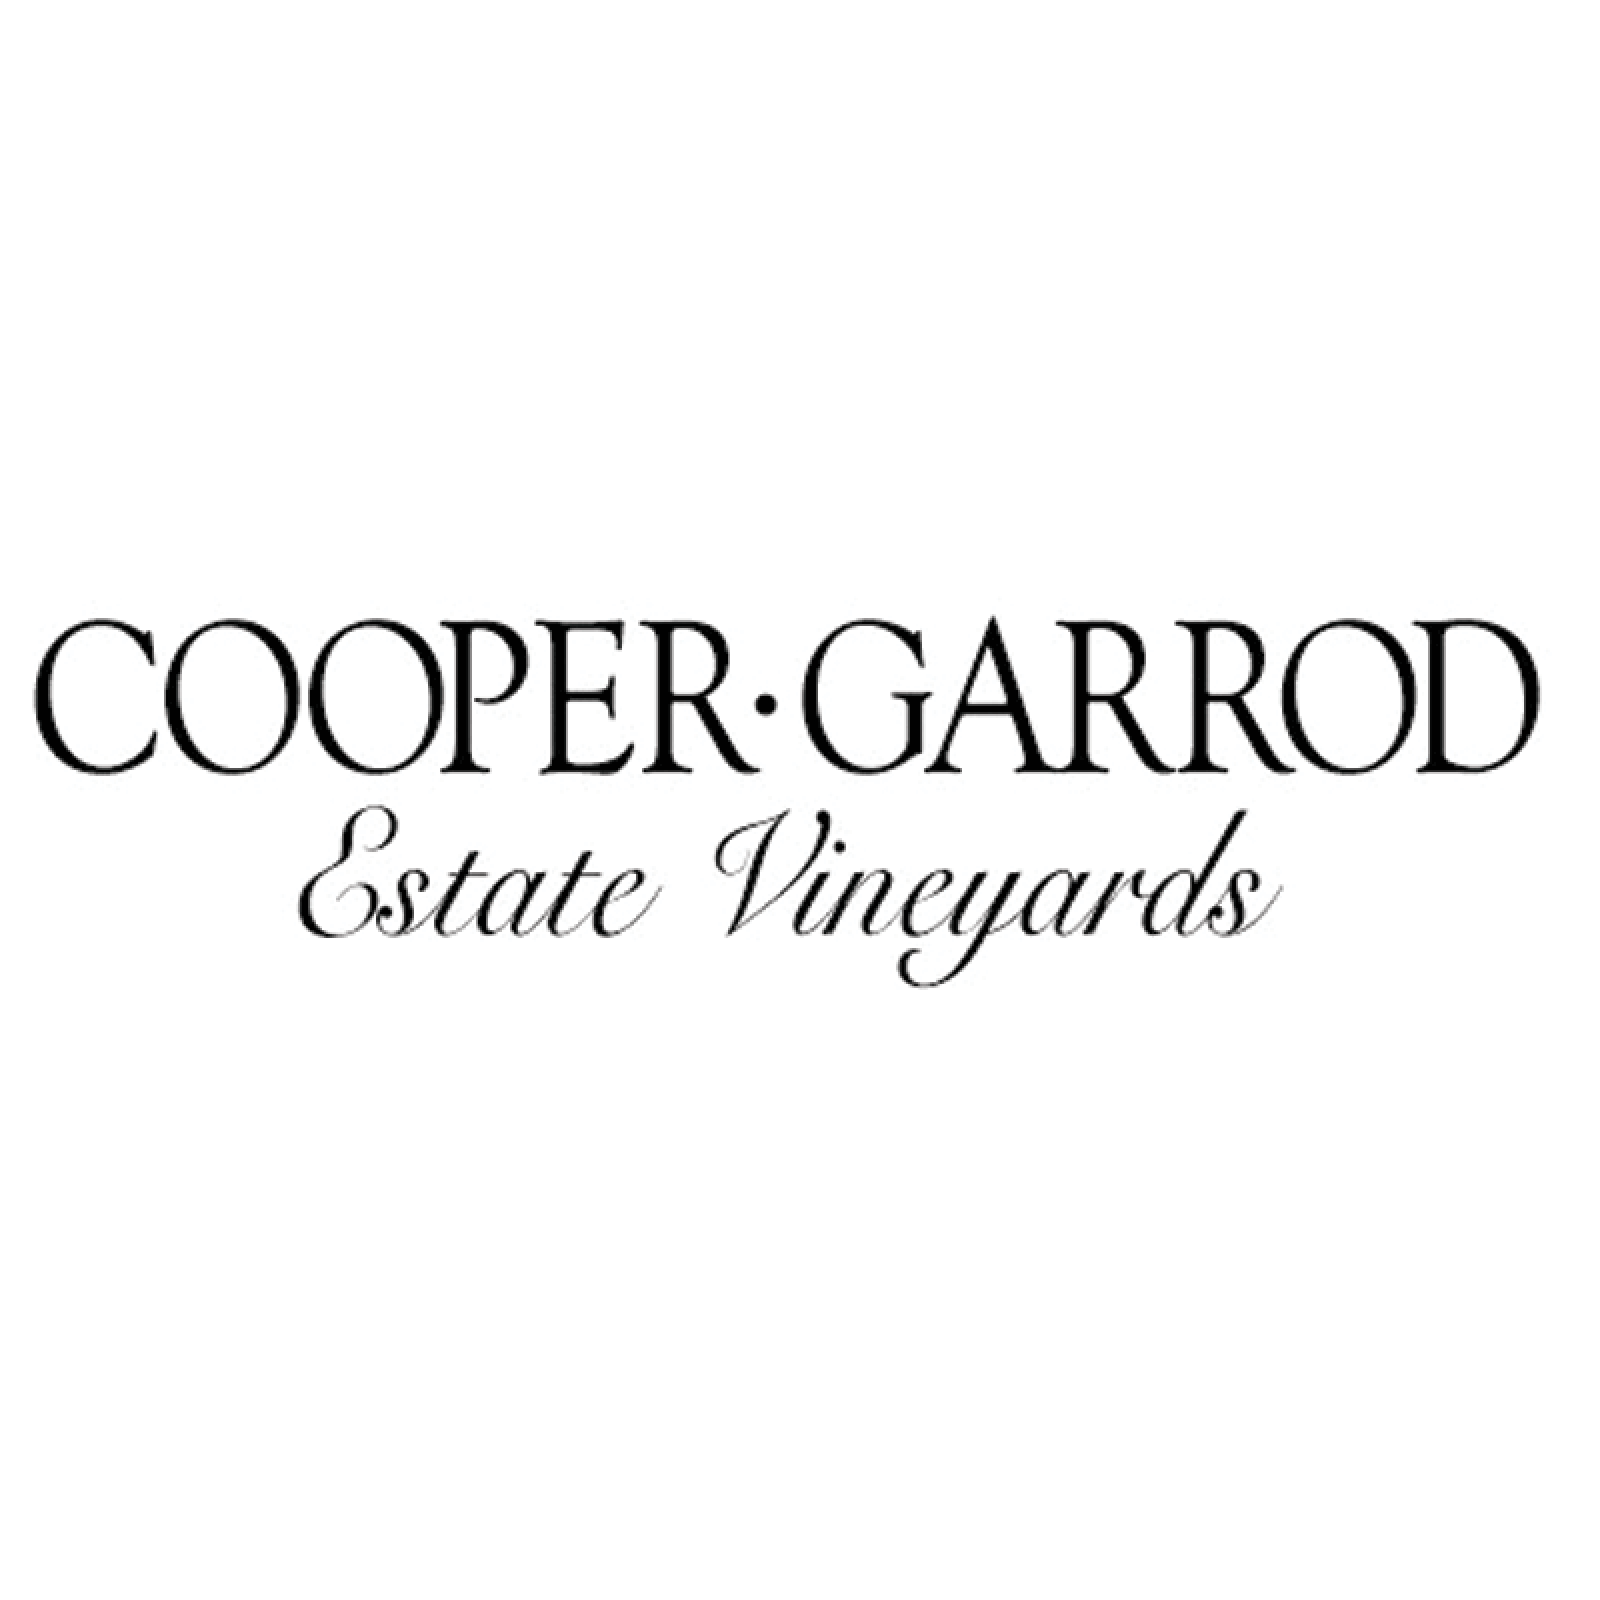 Cooper Garrod F6F Test Pilot 2019 Wine Label 